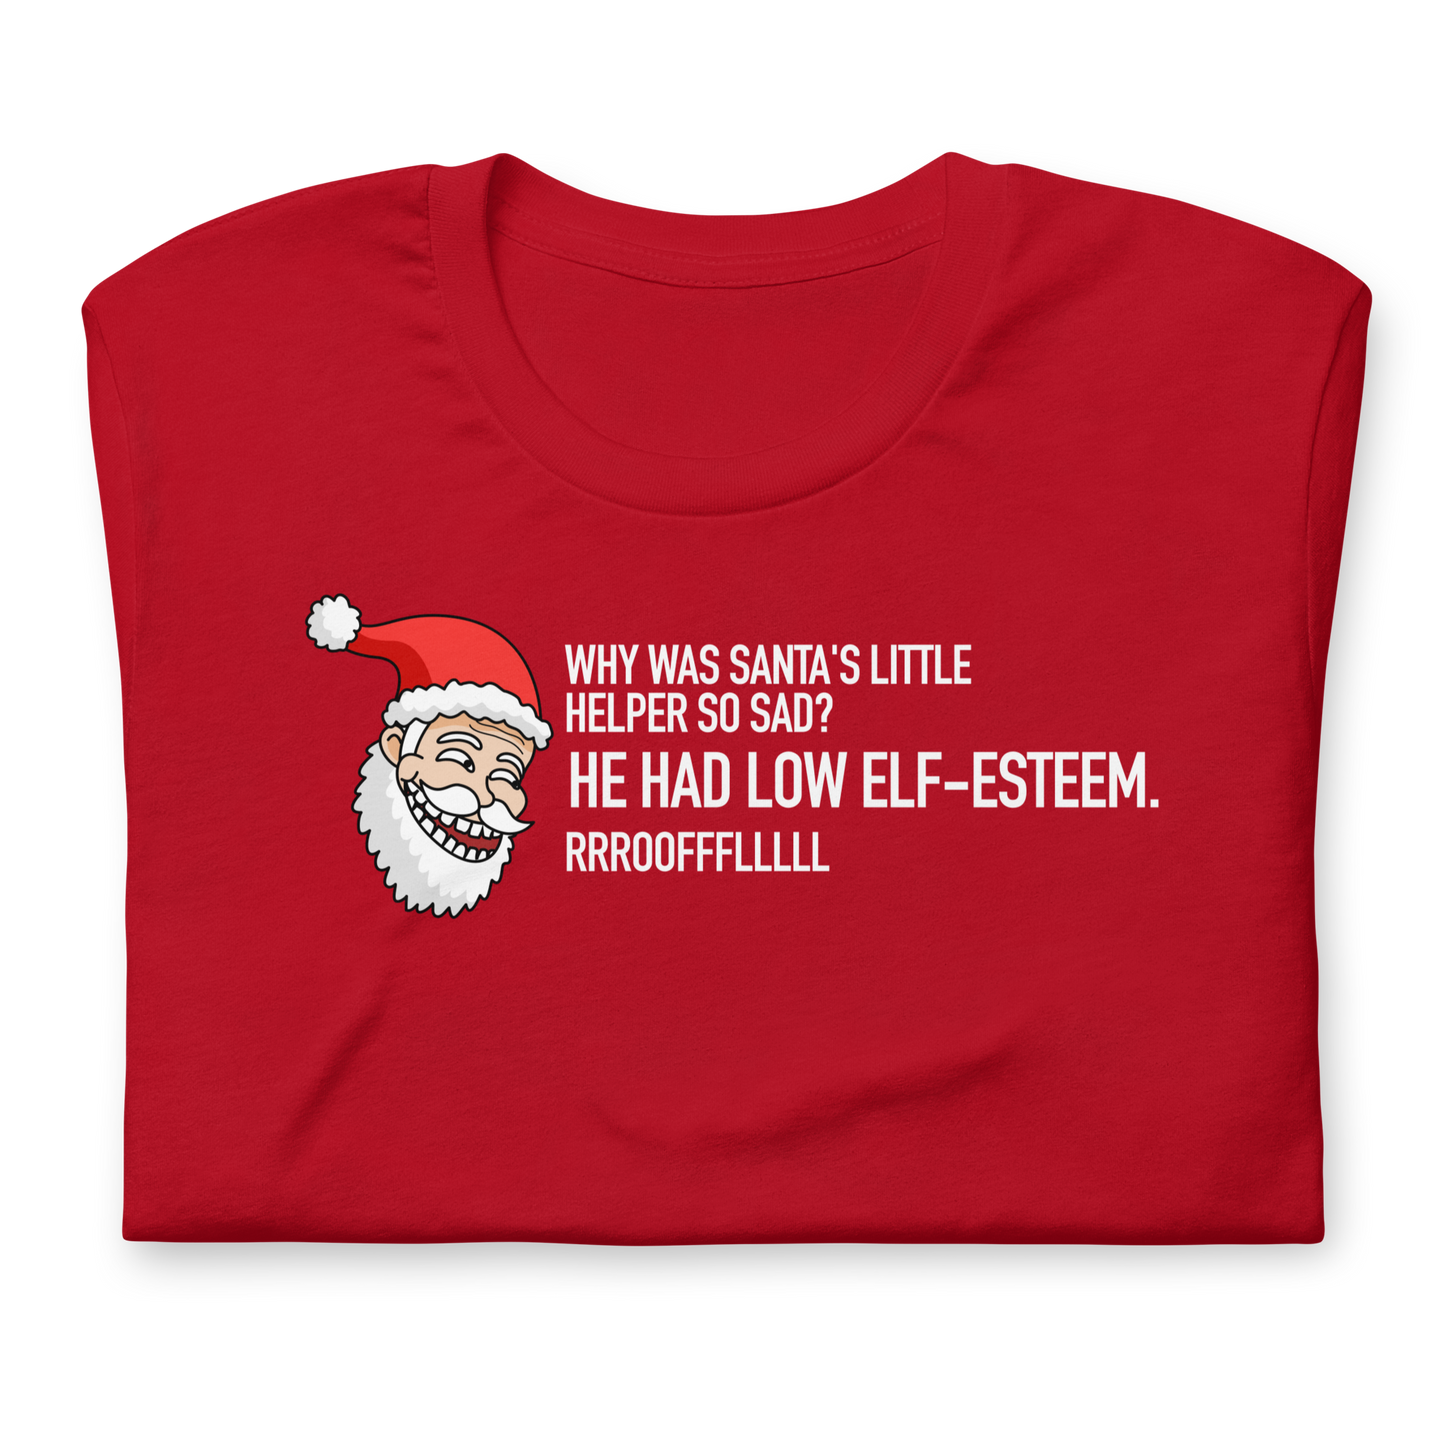 Unisex - CHRISTMAS - Dad Joke Santa - He Had Low Elf Esteem! - Funny t-shirt